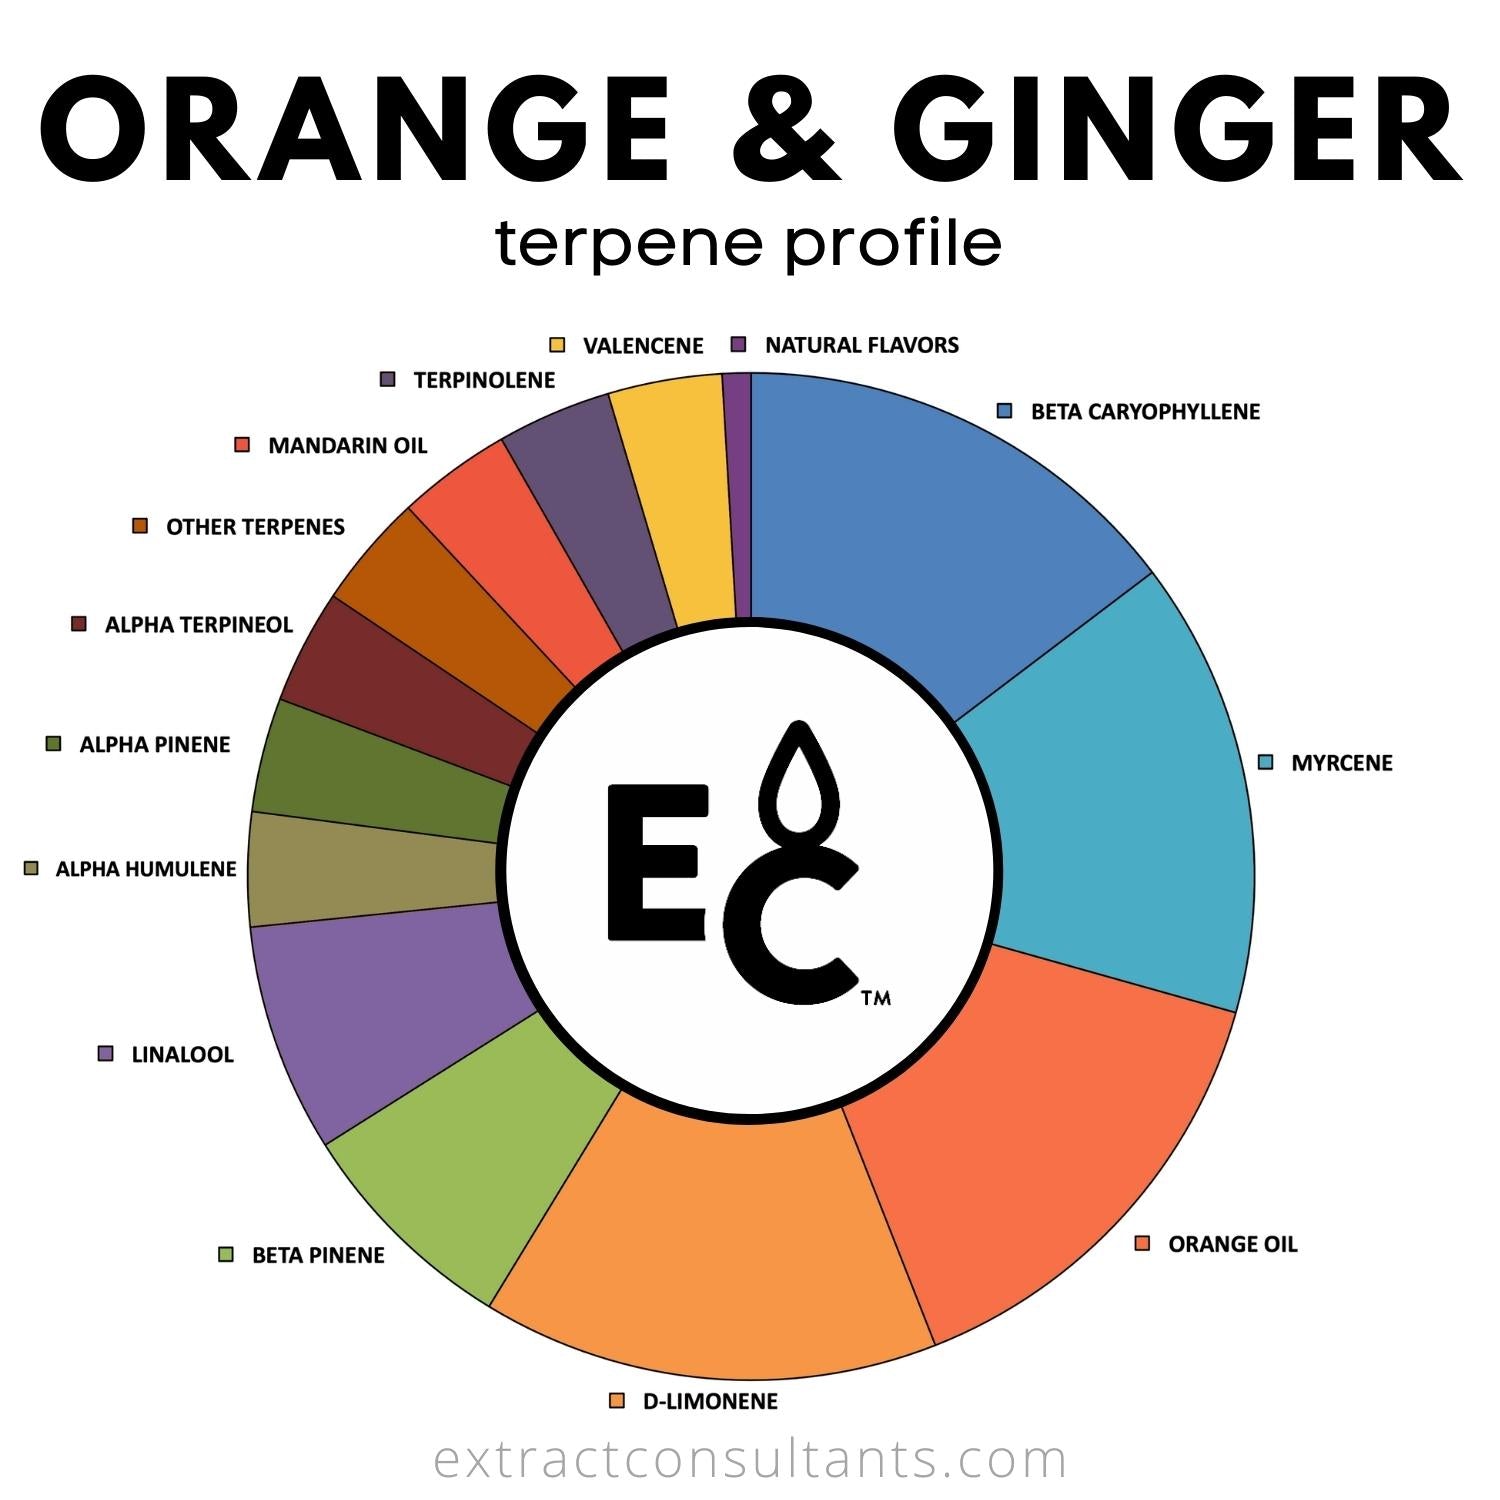 Orange and ginger terpene profile chart